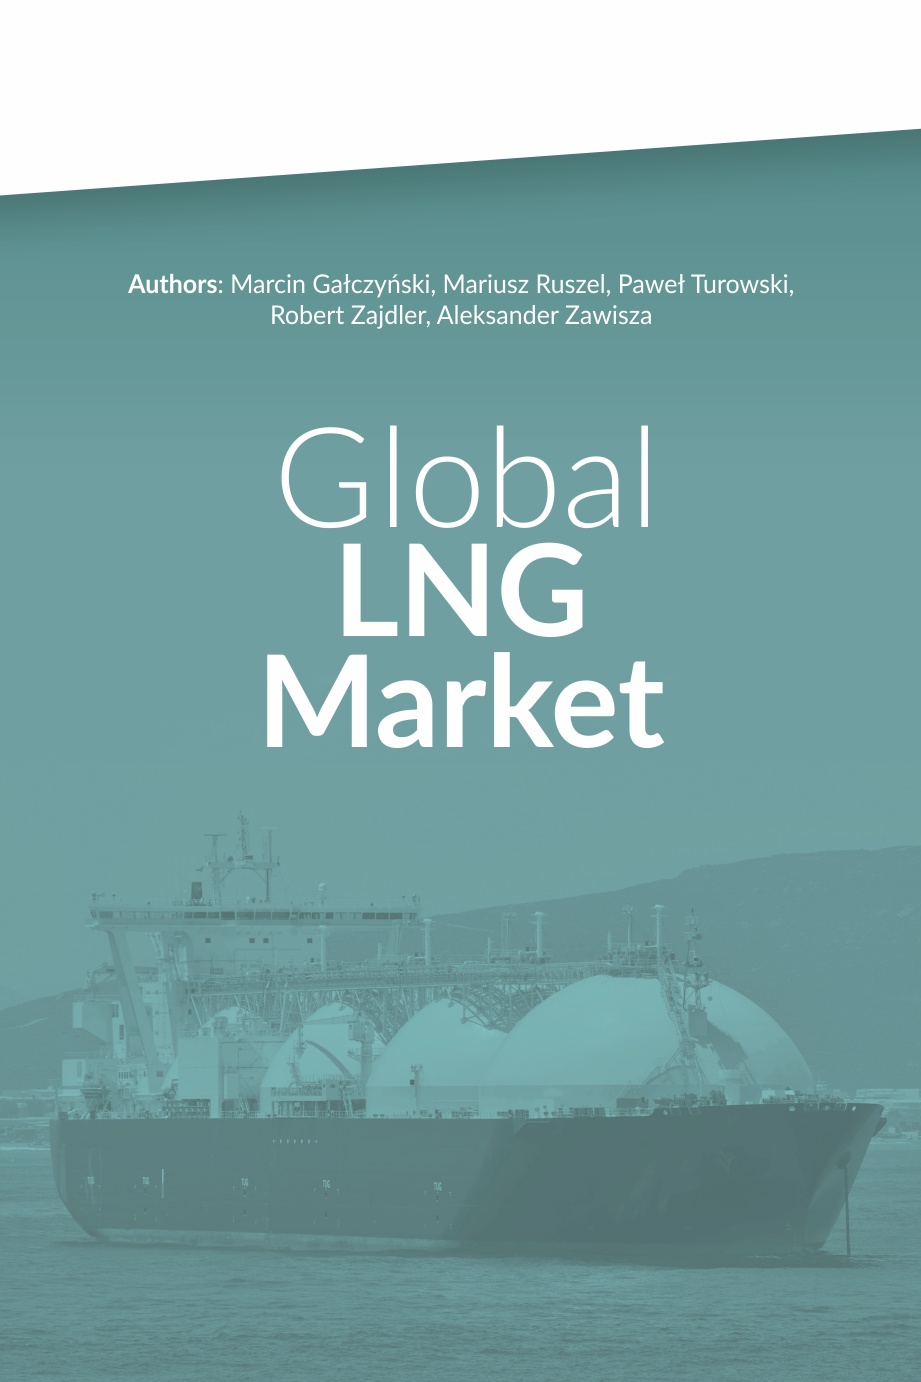 Global LNG Market. Fot. BiznesAlert.pl